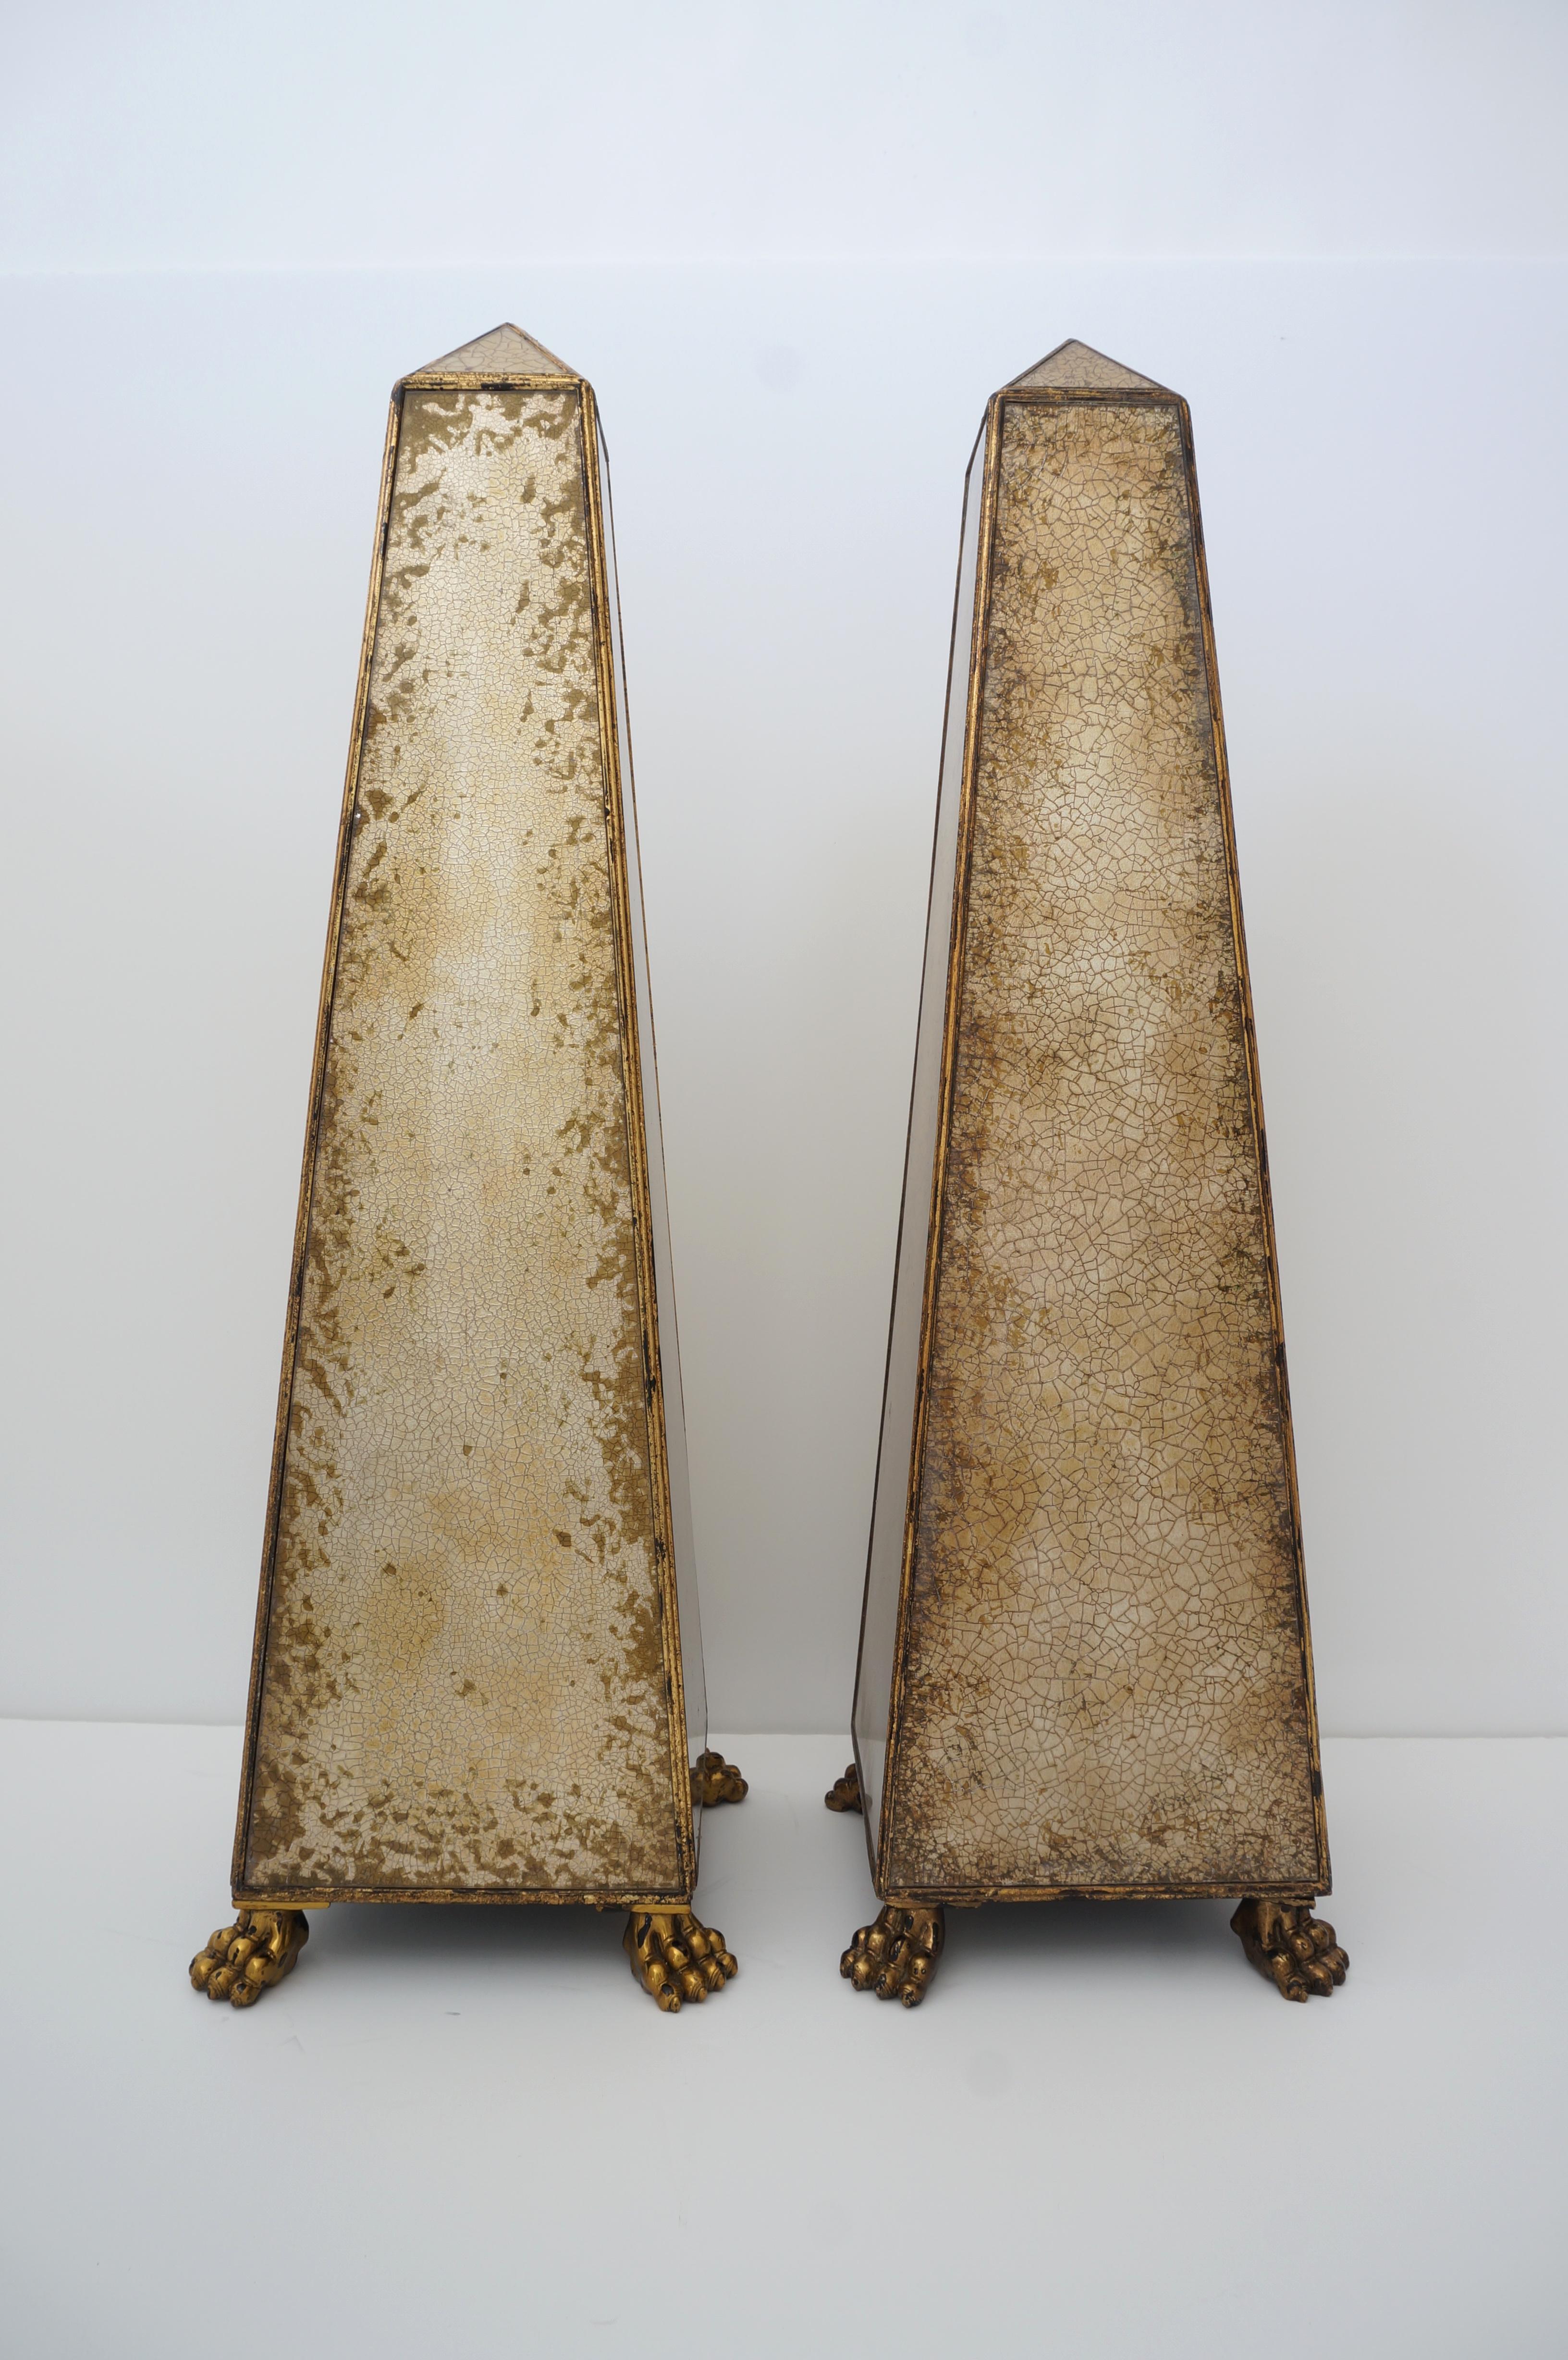 Cast Pair of Maitland Smith Attributed Églomisé Obelisks